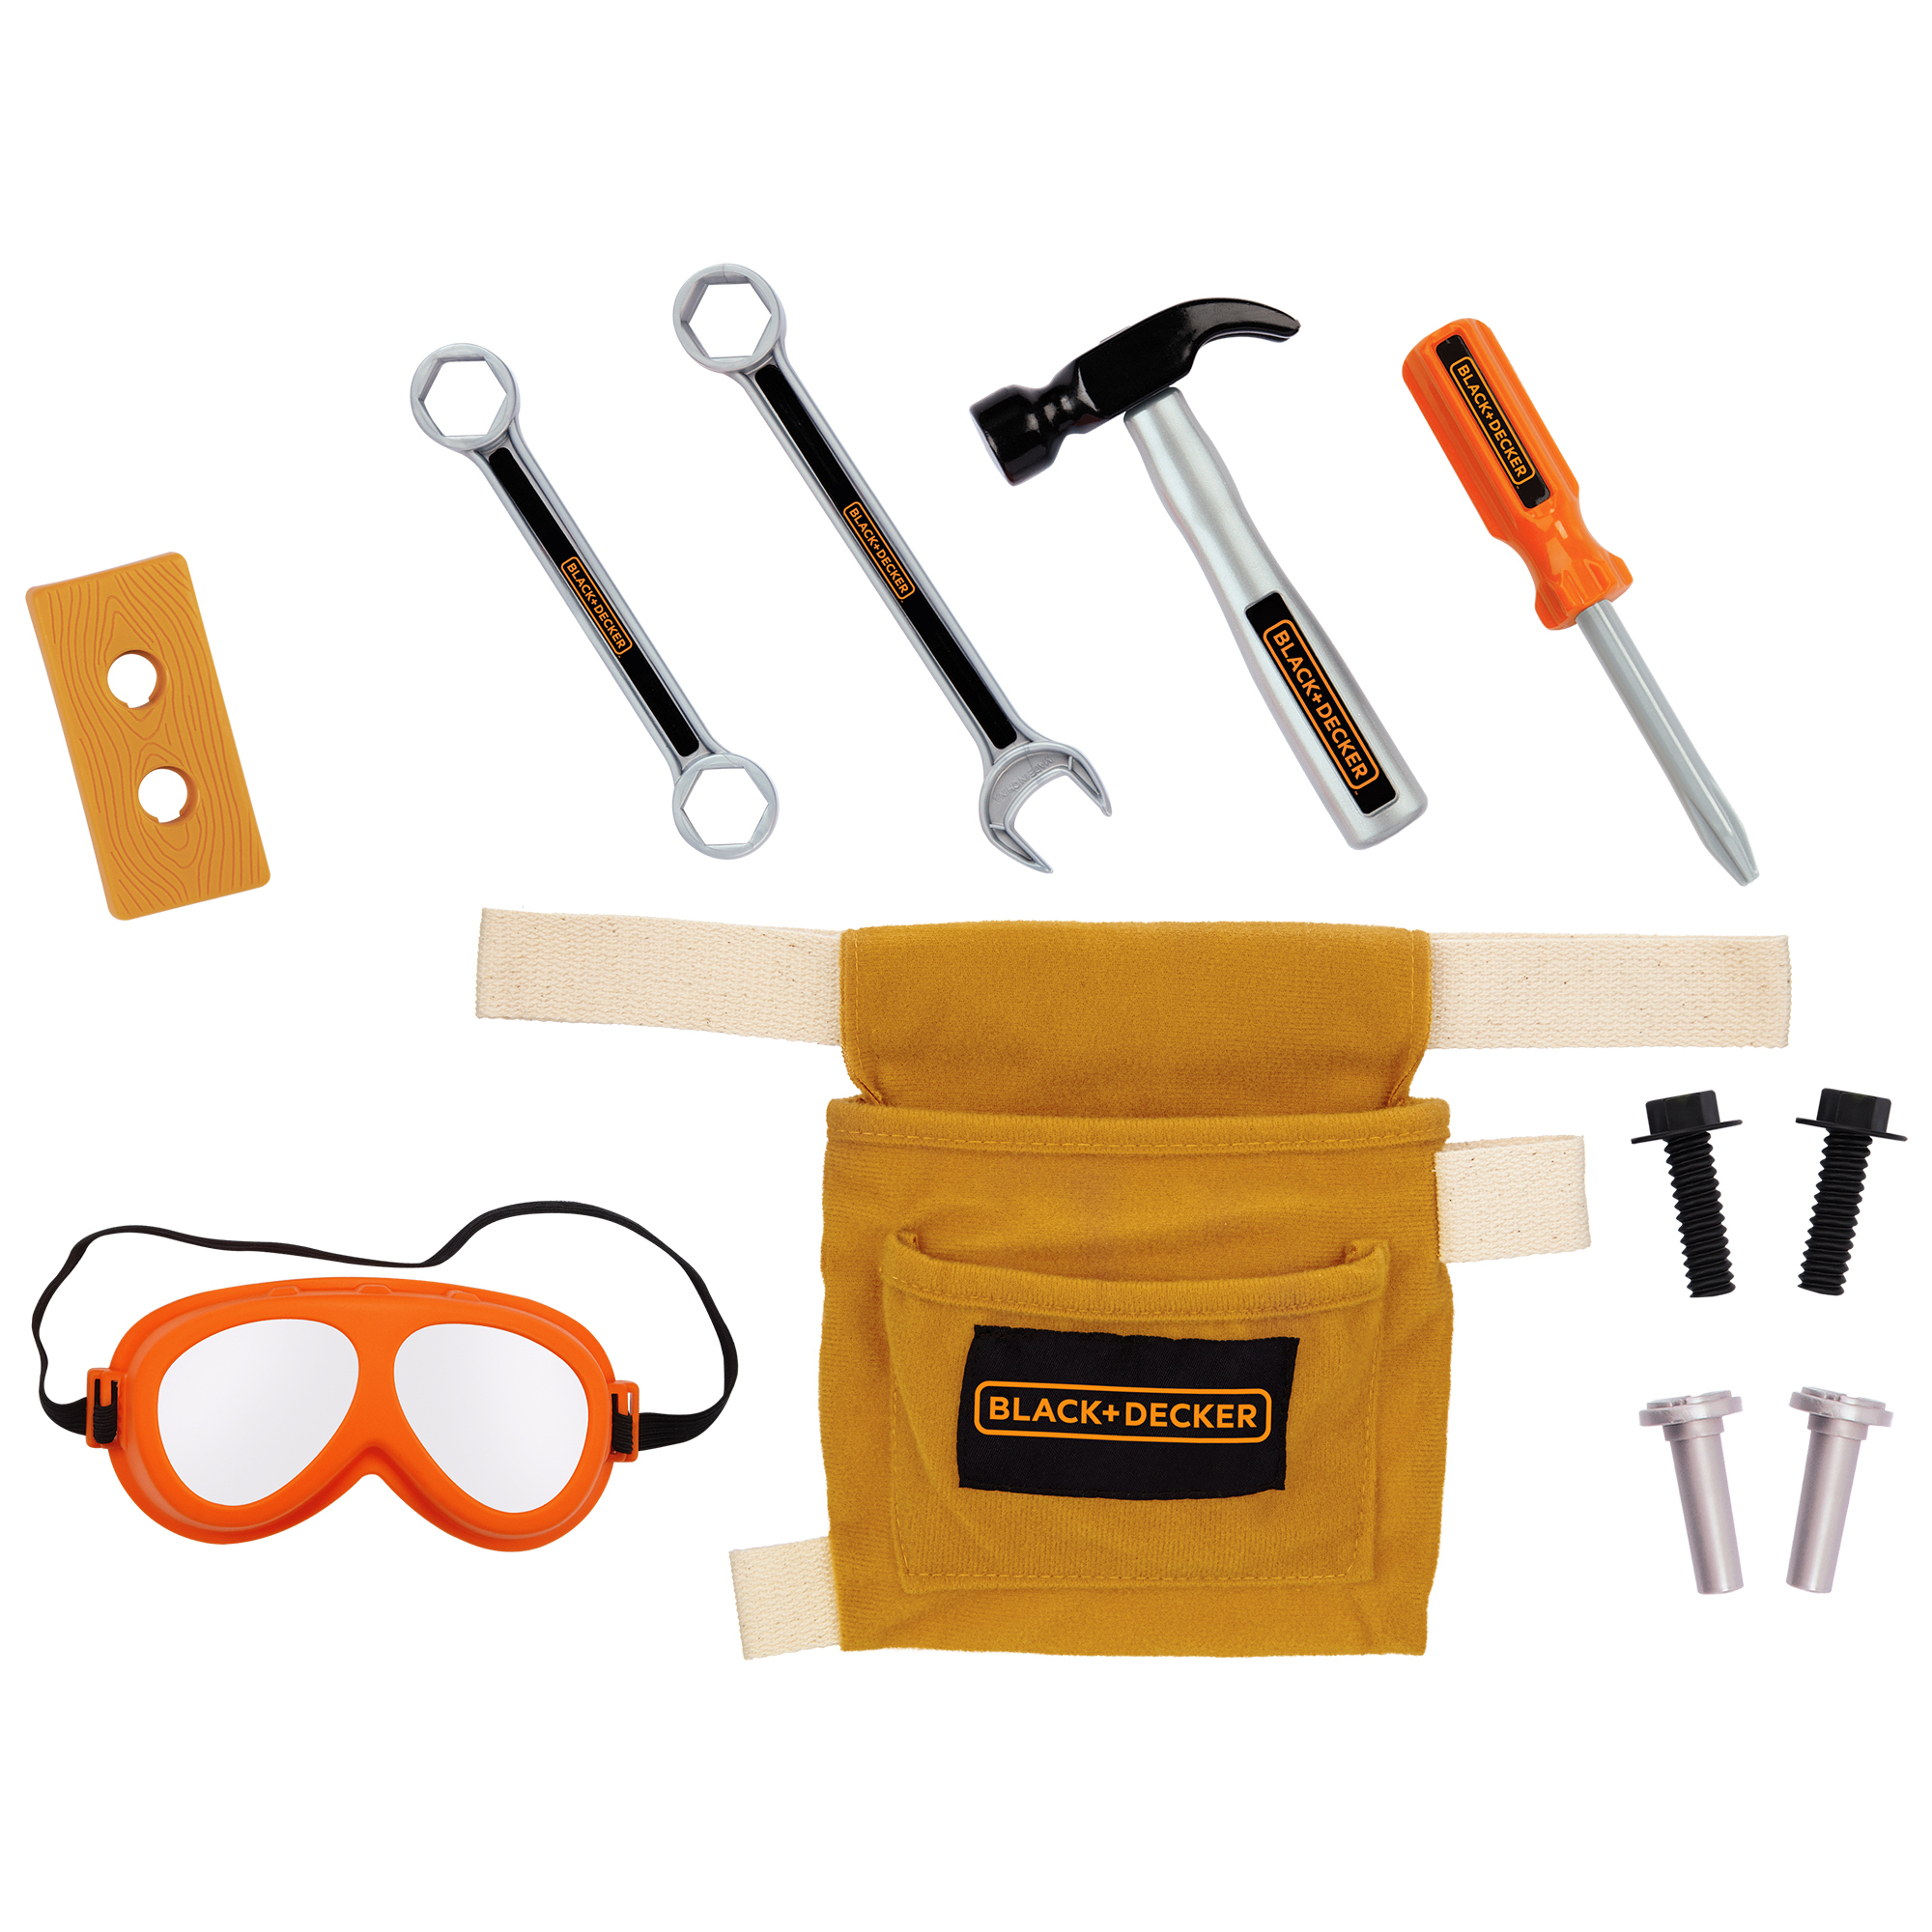 Junior Tool Belt Set with 11 Tools and Accessories - JAKKS Pacific, Inc.